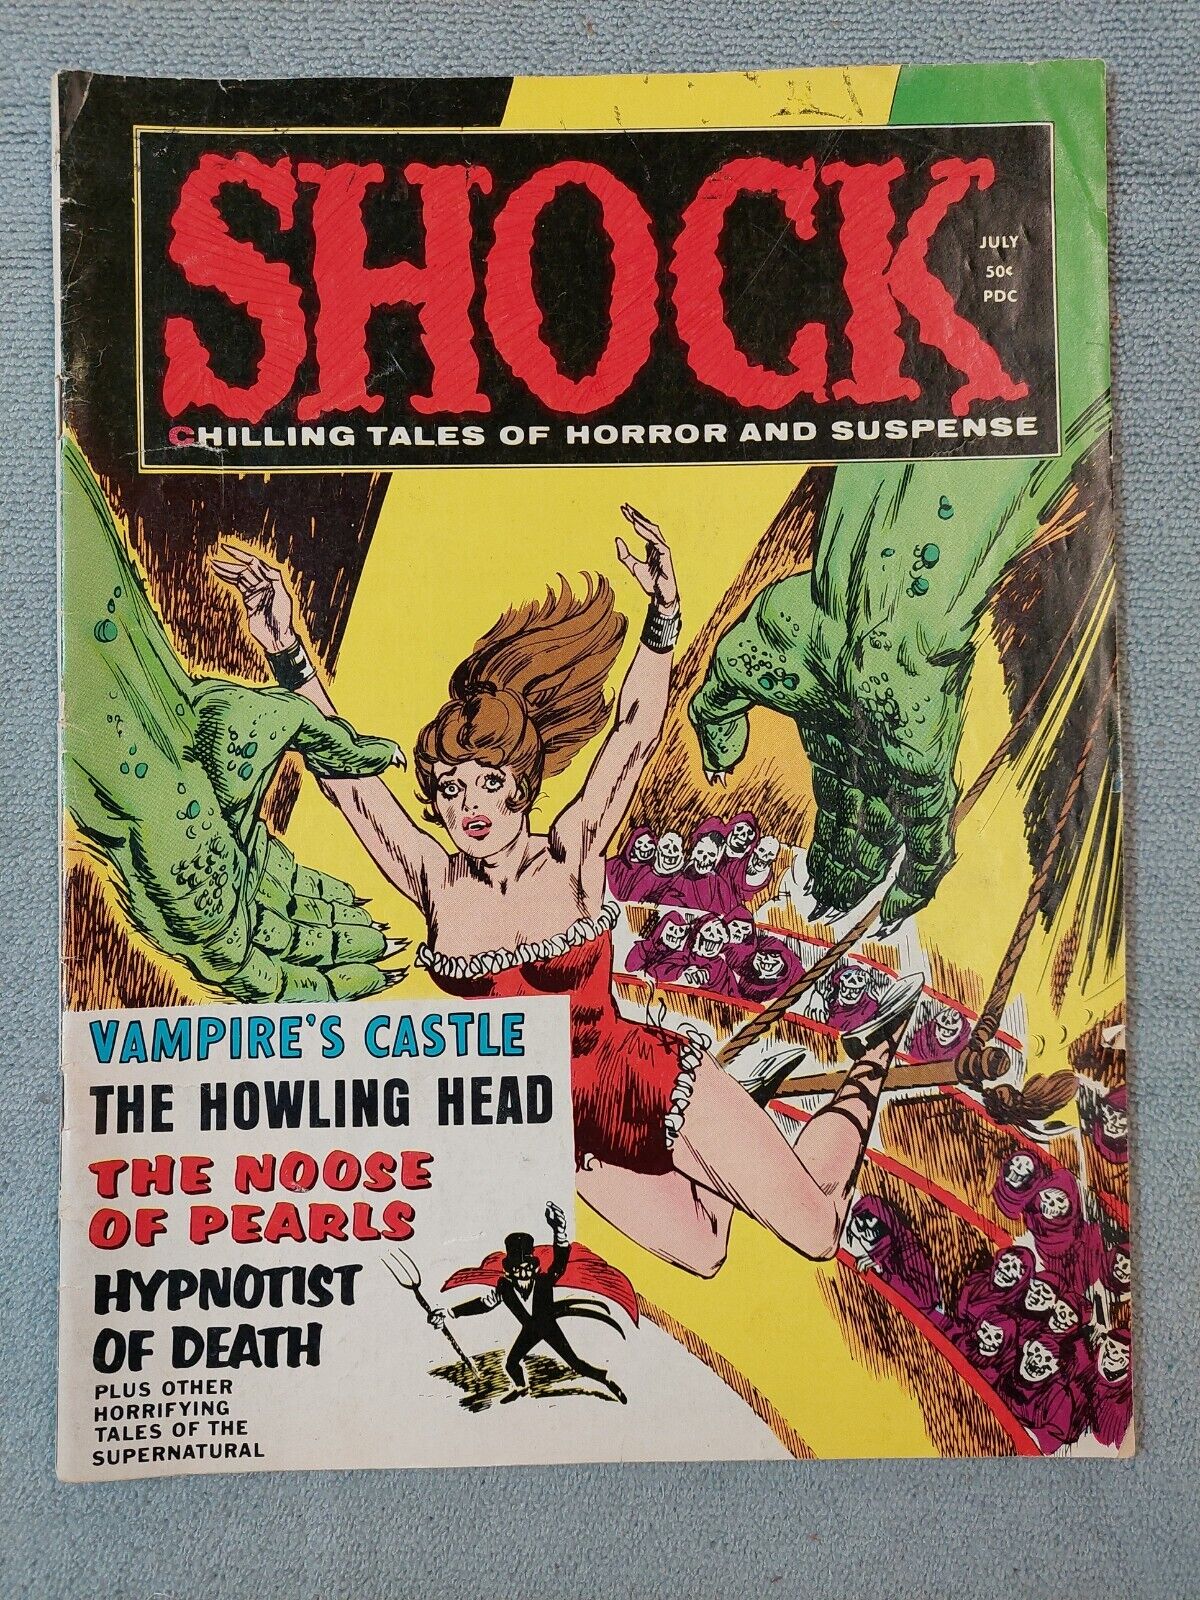 Shock Volume 1 # 8         Stanley Publications  1970